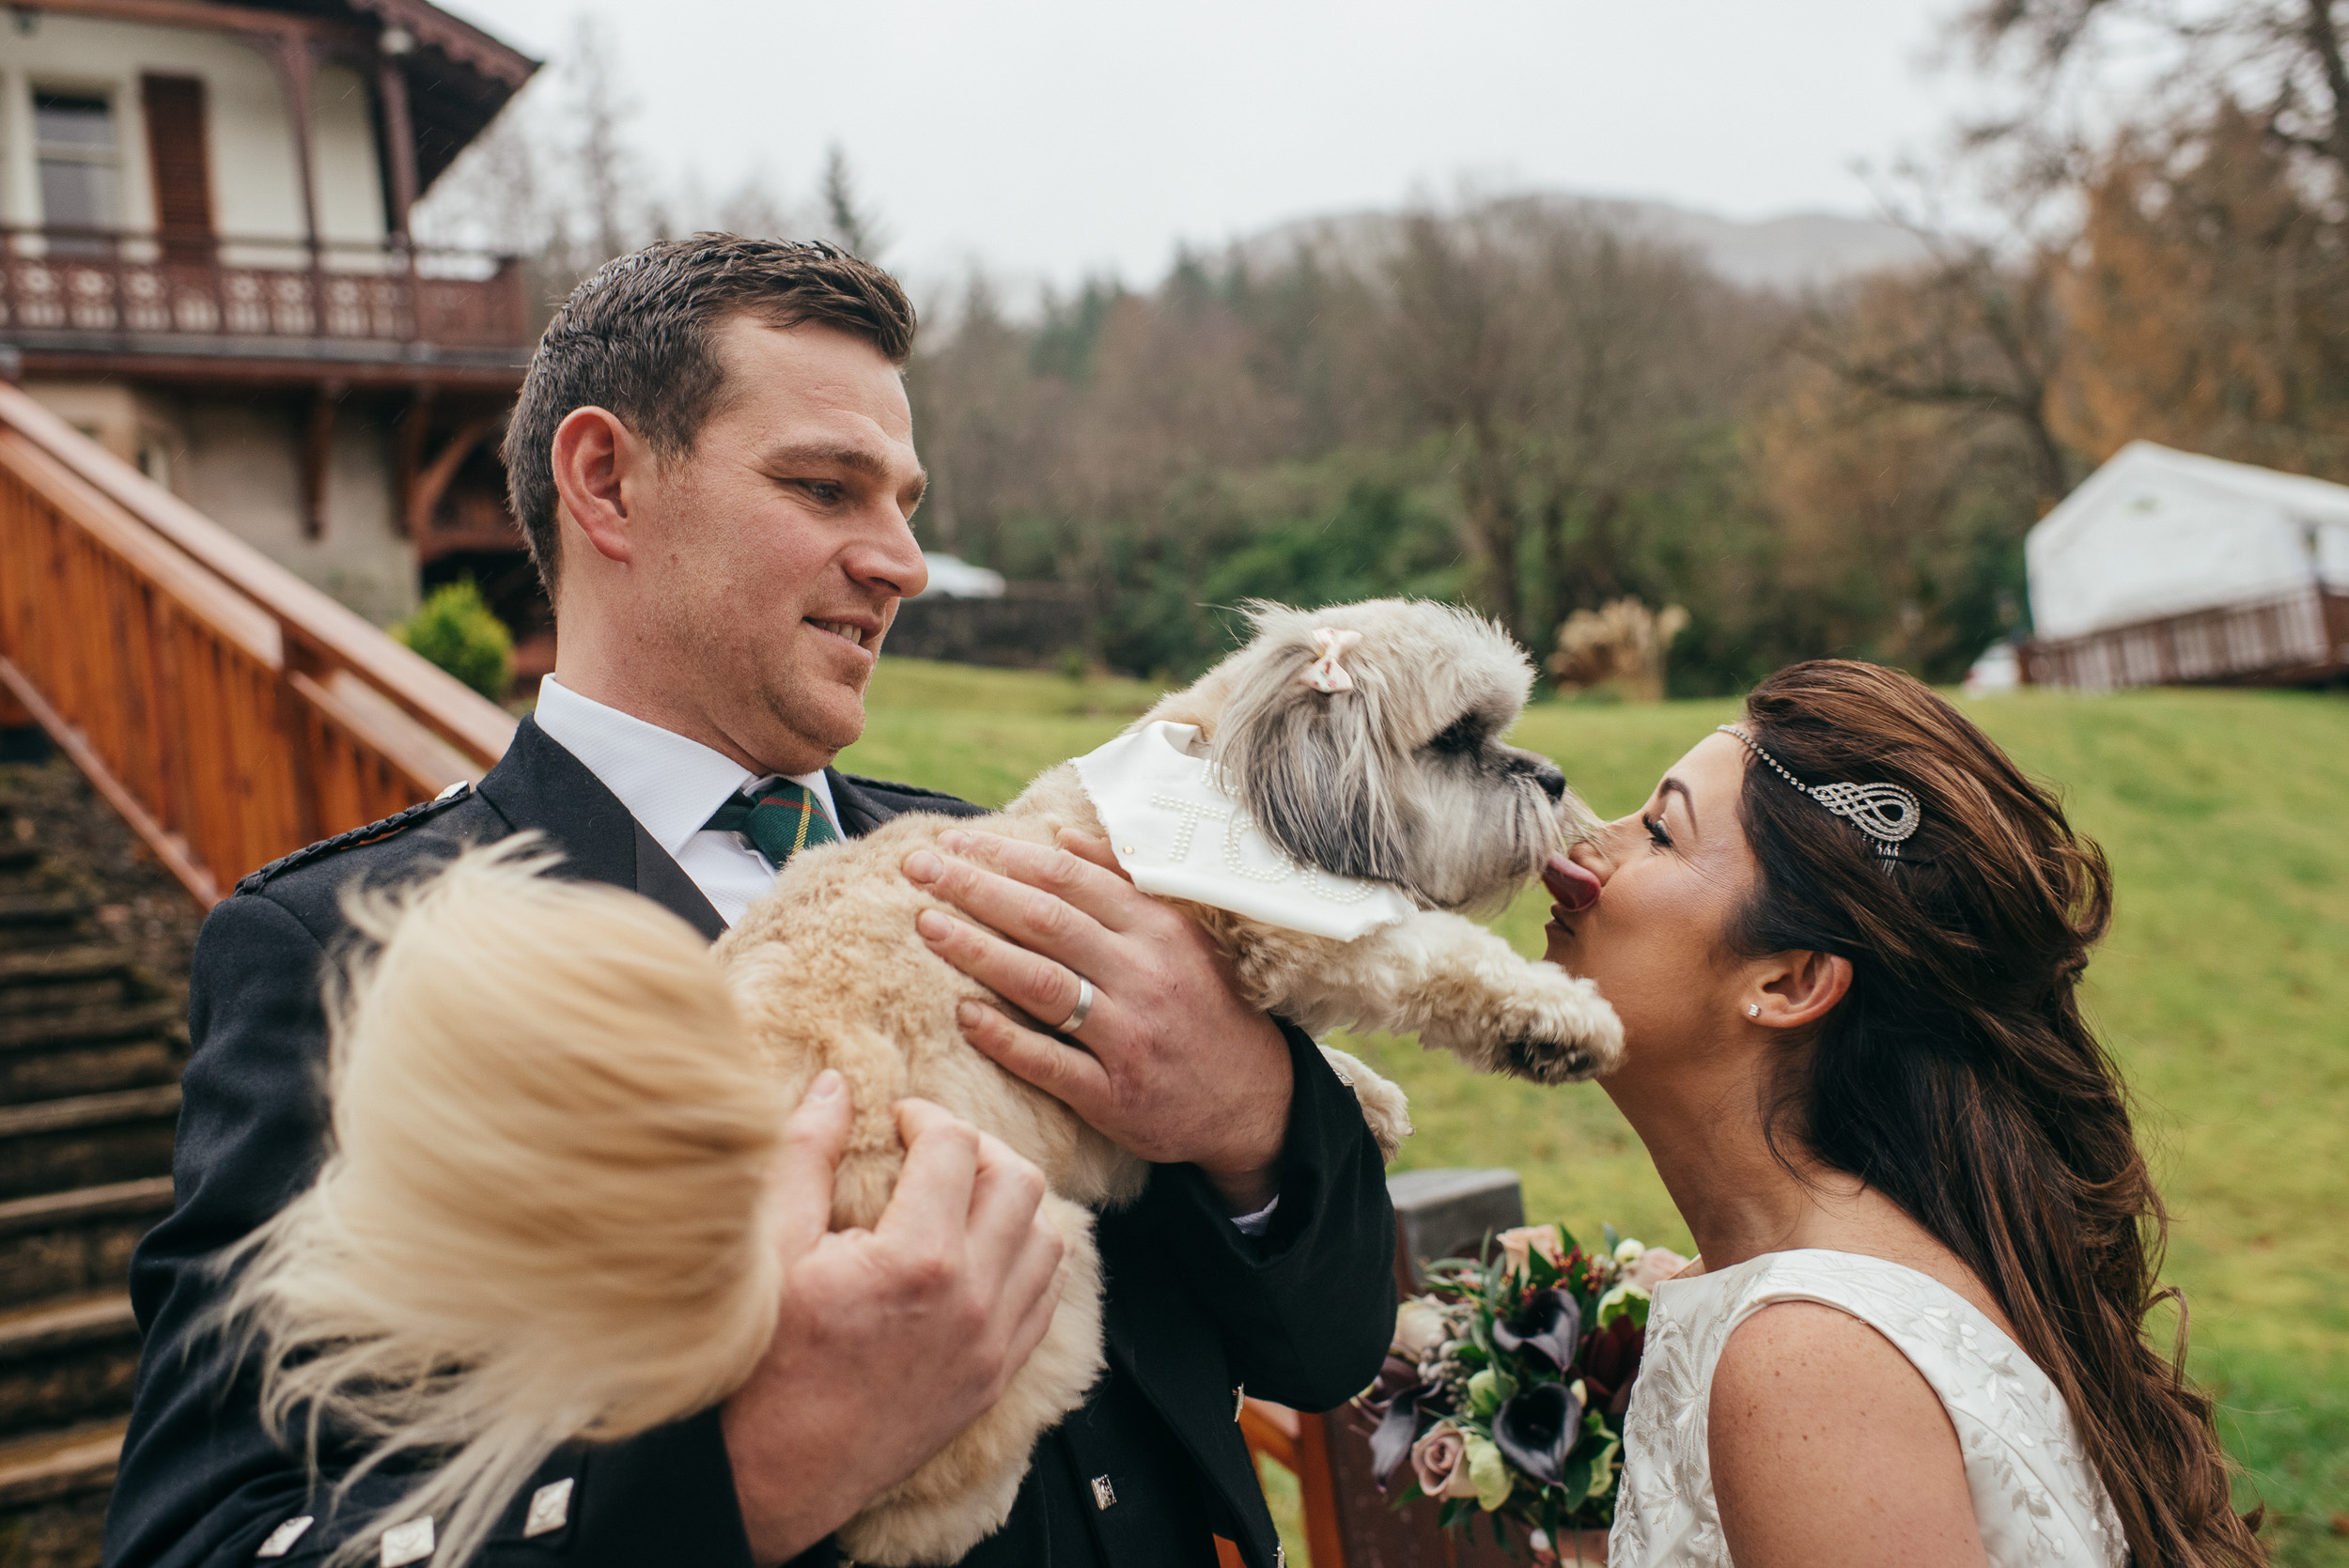 Lodge on Loch Goil - Scottish Wedding Photographer